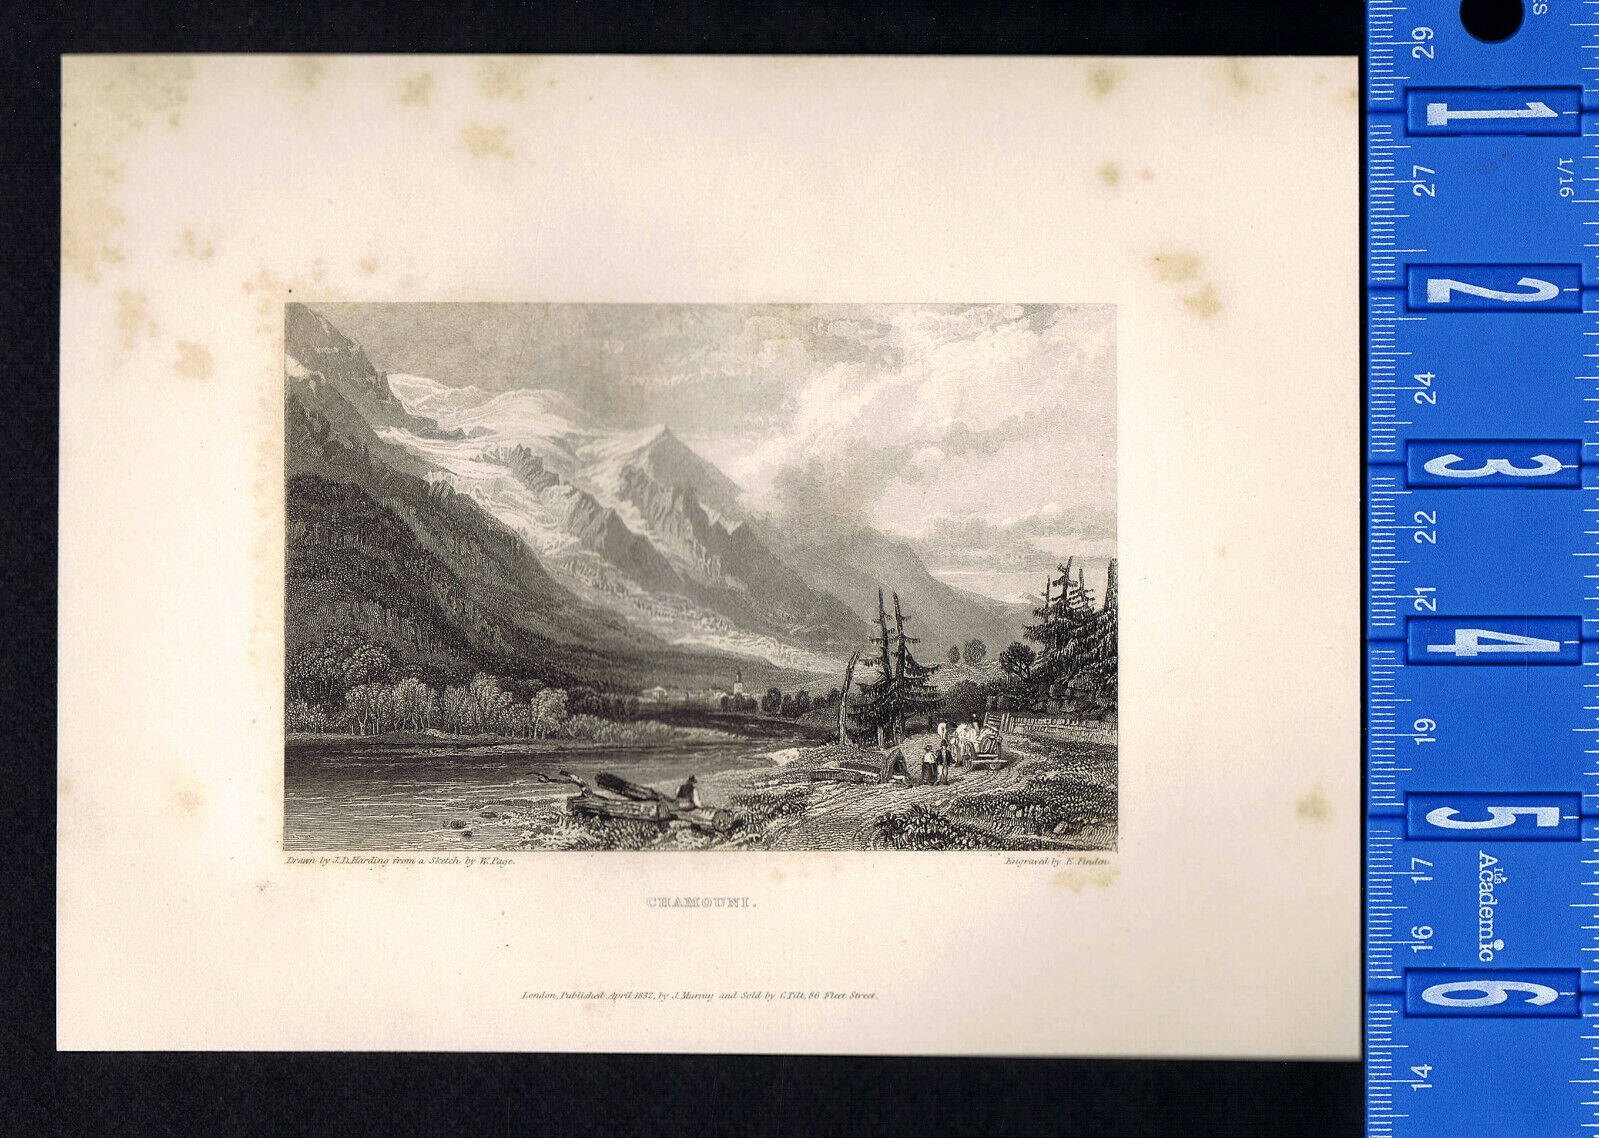 Vale of Chamouni (Chamonix), Mont Blanc - France  -1833 Engraving - Lord Byron